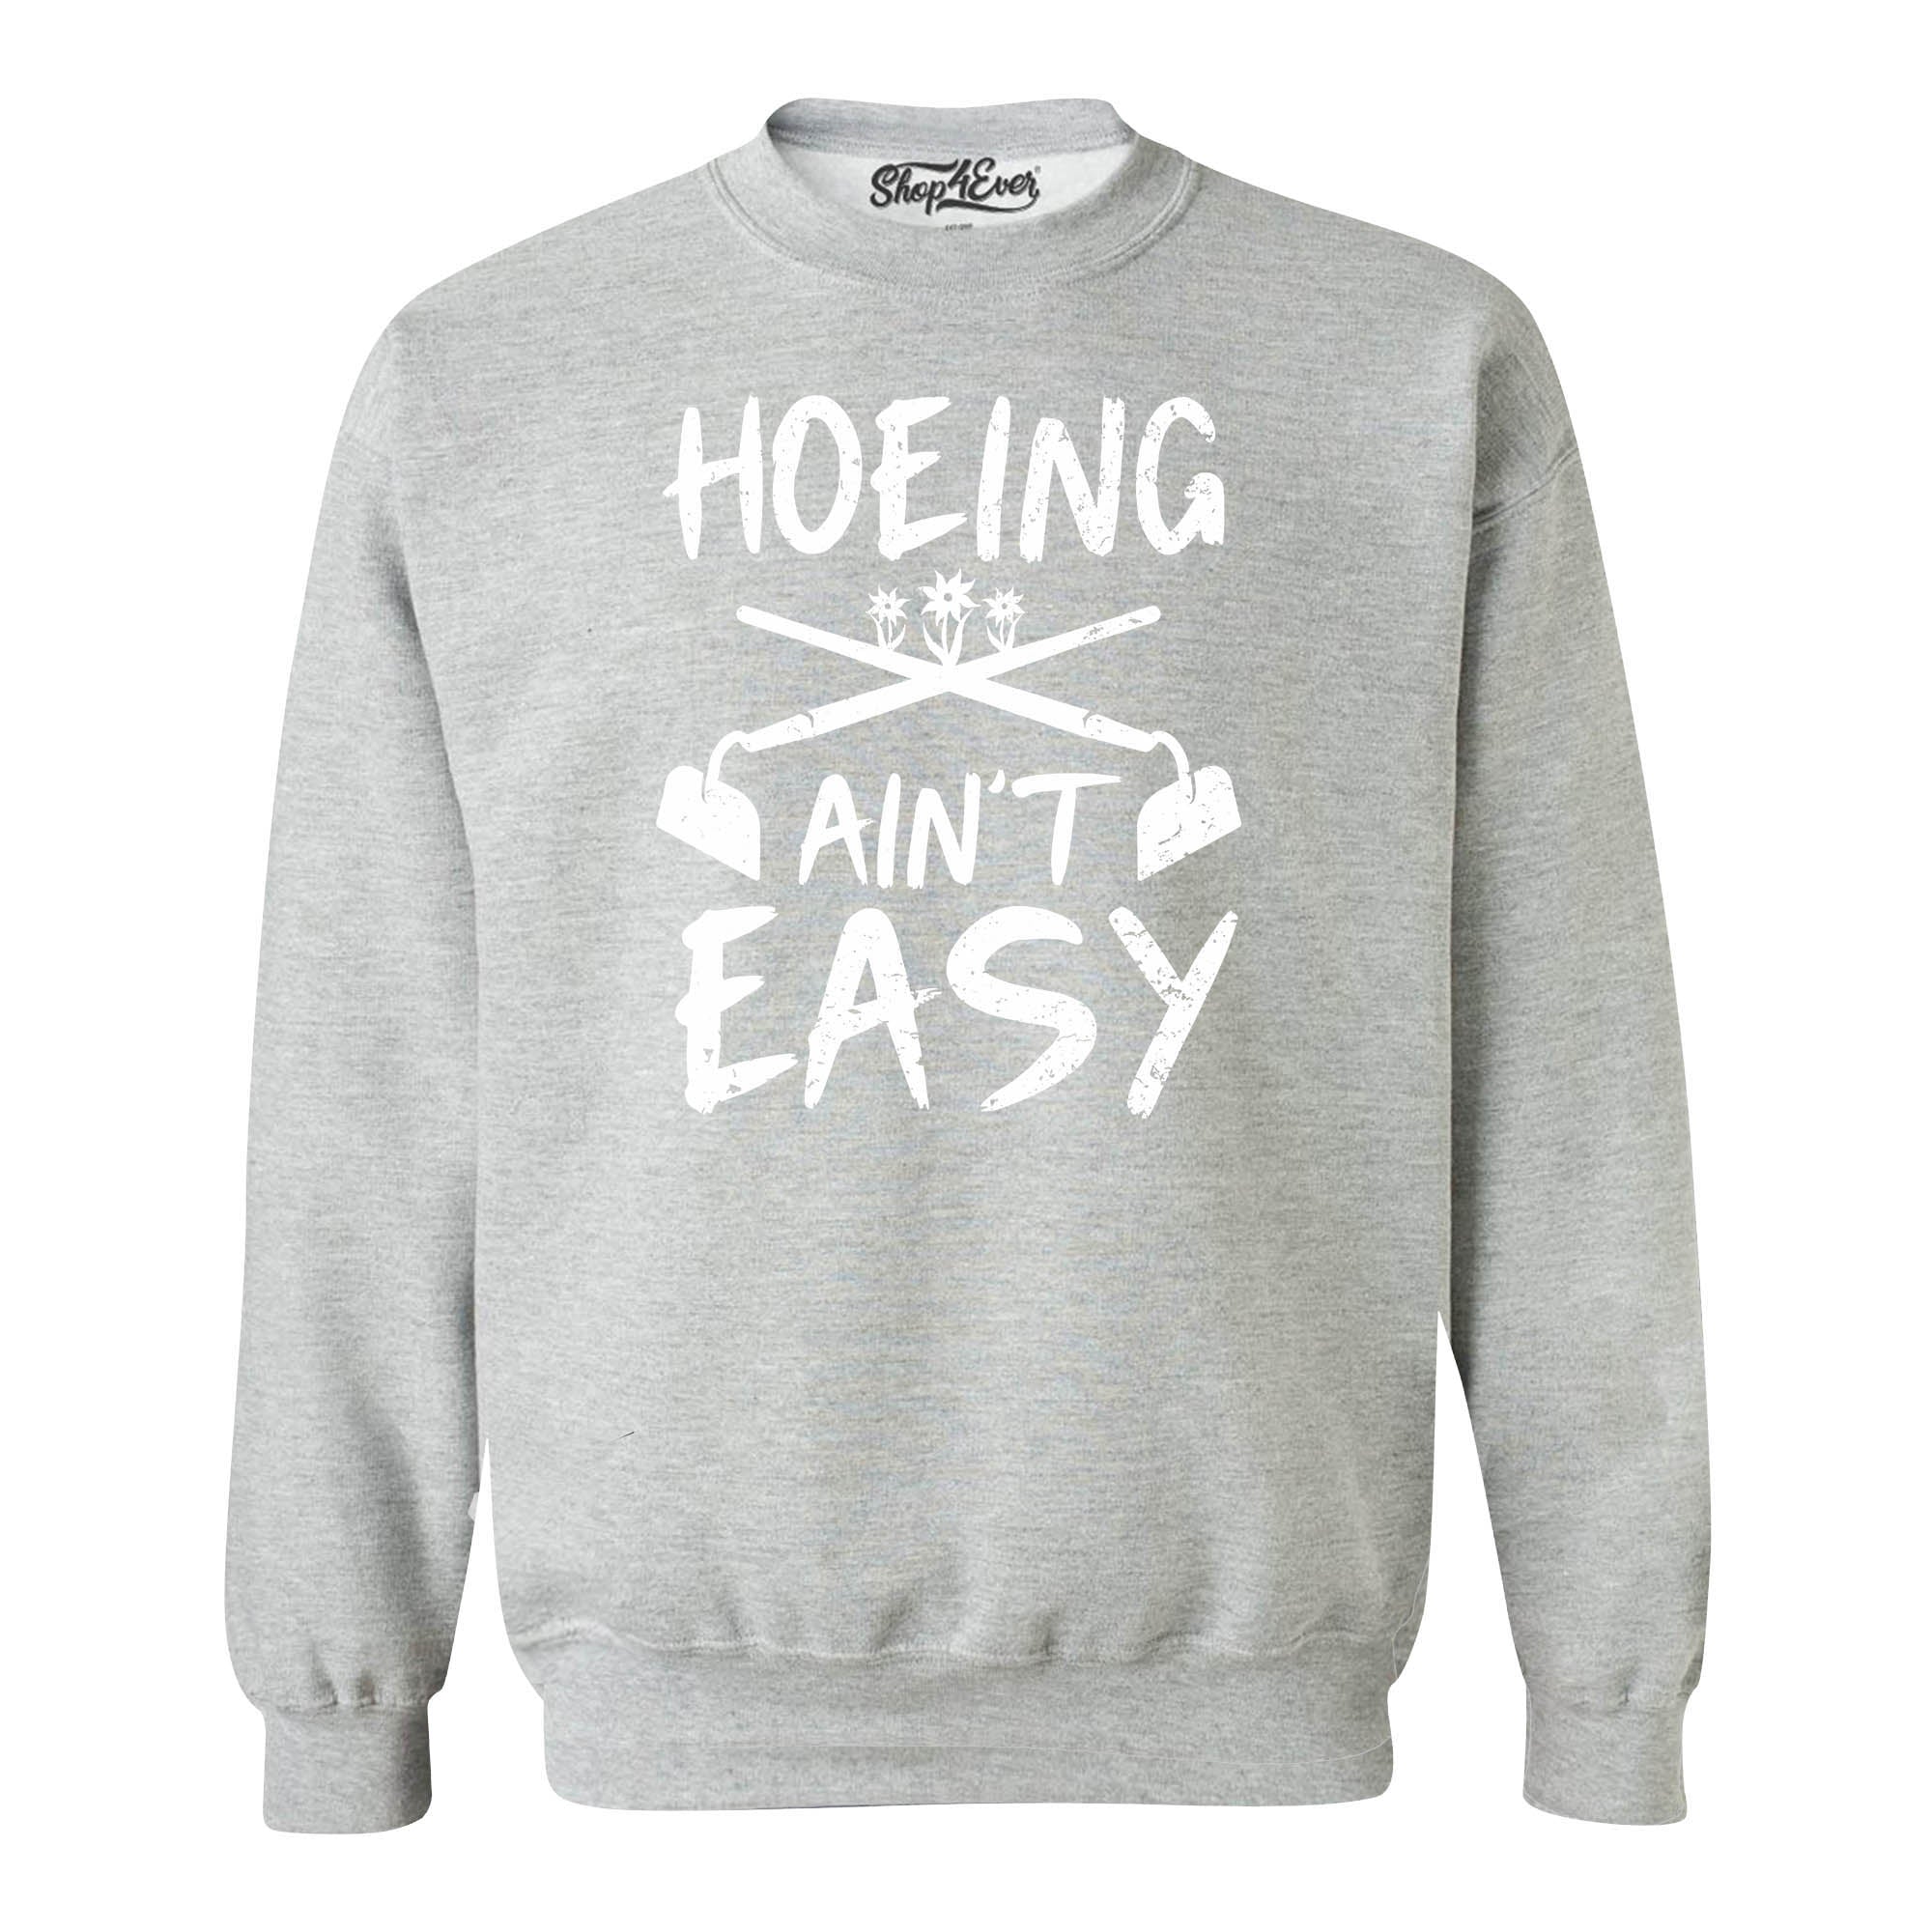 Hoeing Ain't Easy Funny Crewneck Sweatshirts